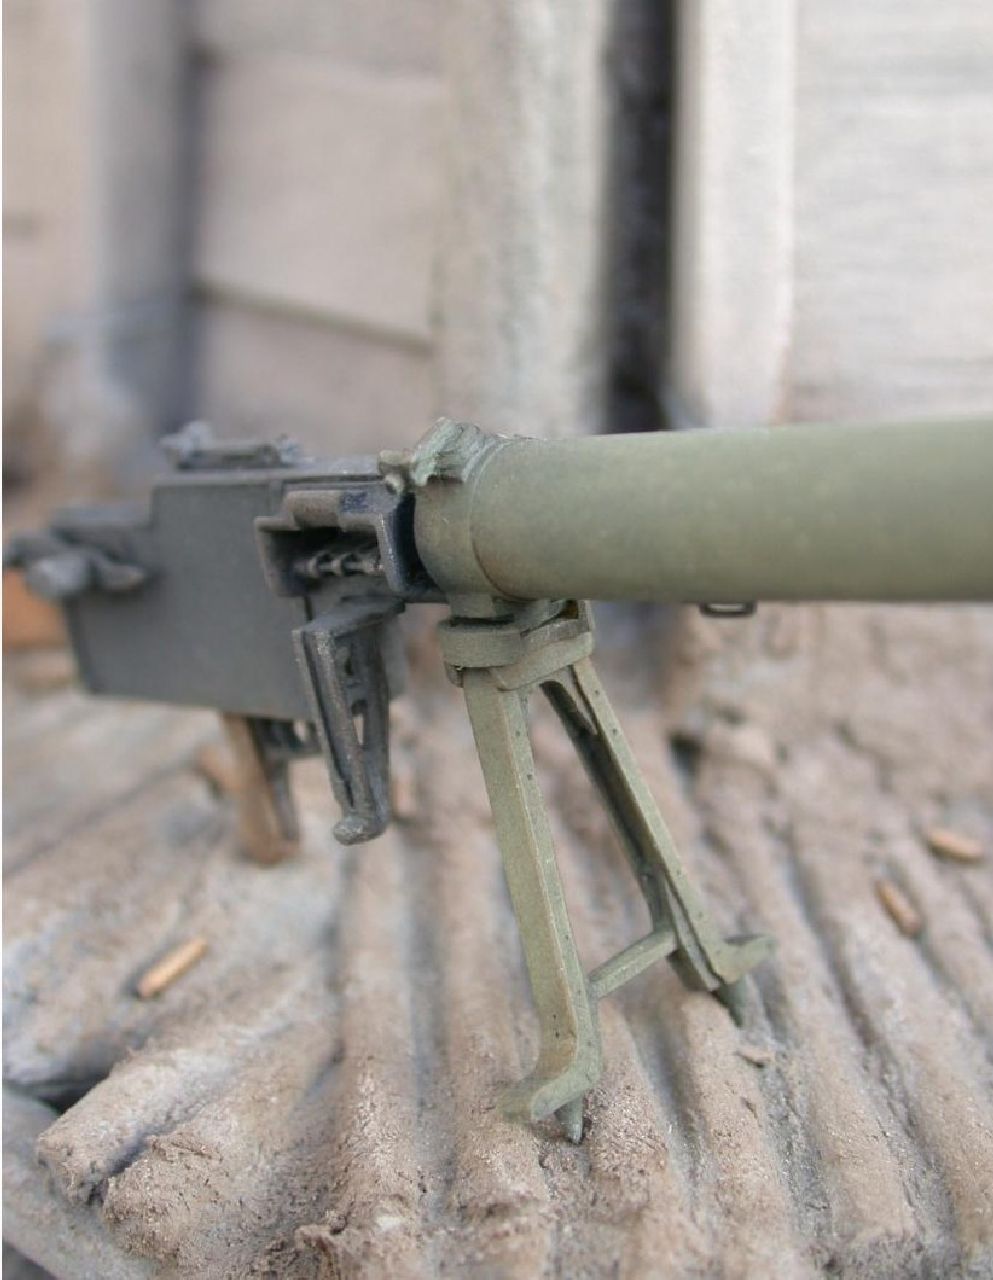 Ammunition Belt For WWI German Machine Gun MG 08 In Ammo Can Stock